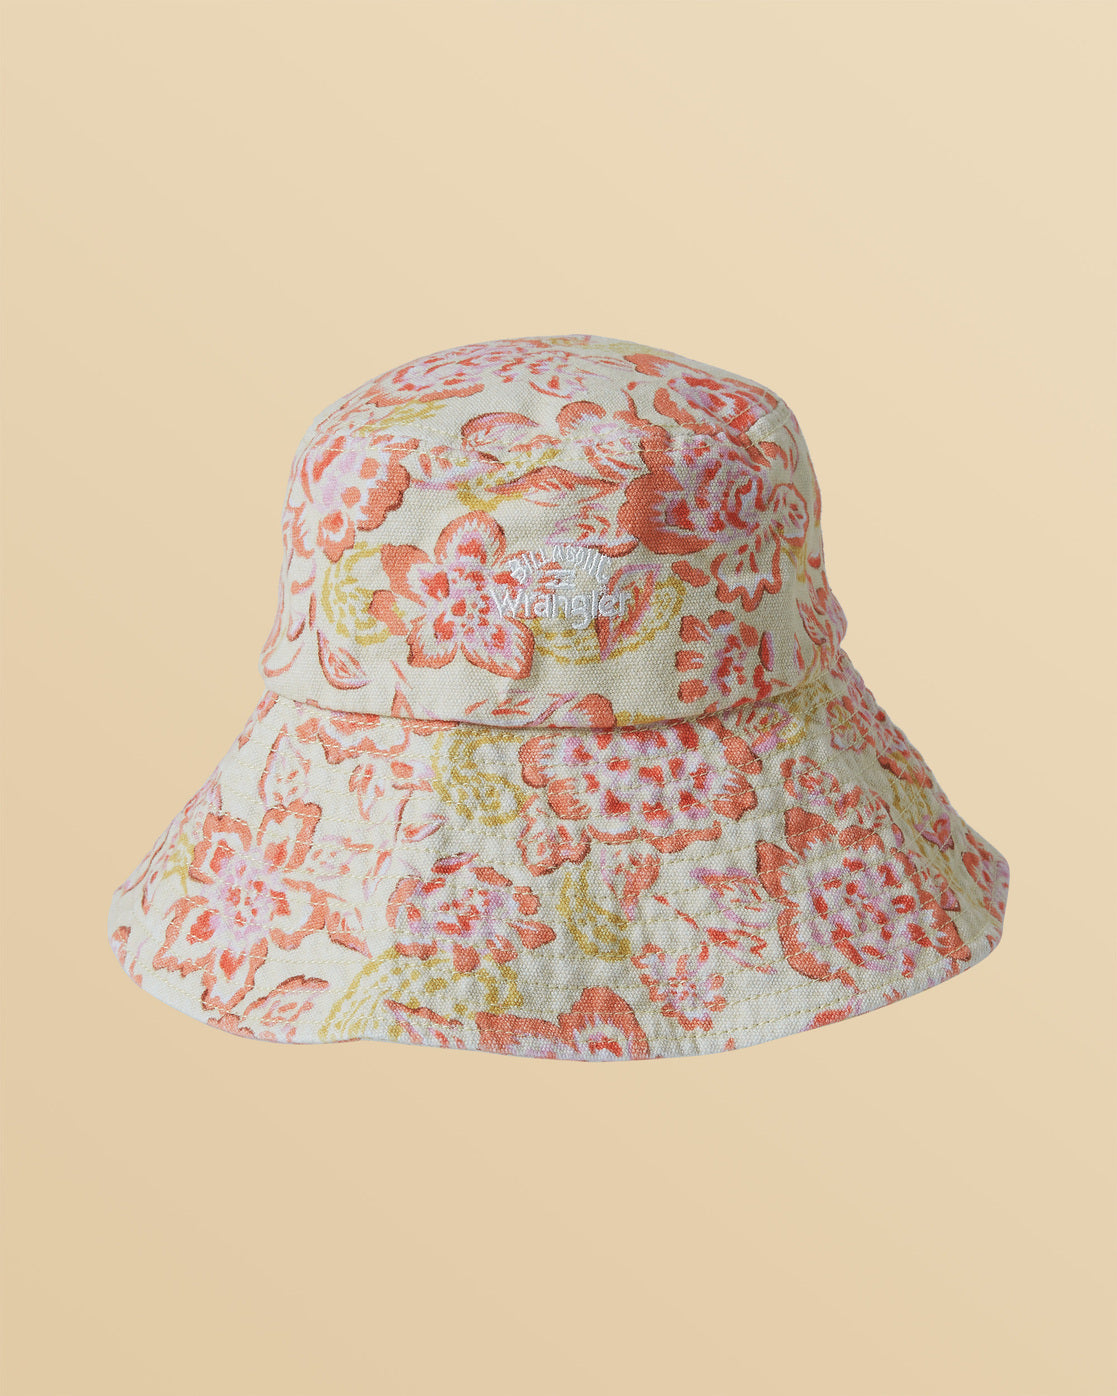 Billabong X Wrangler Sunny Daze Bucket Hat